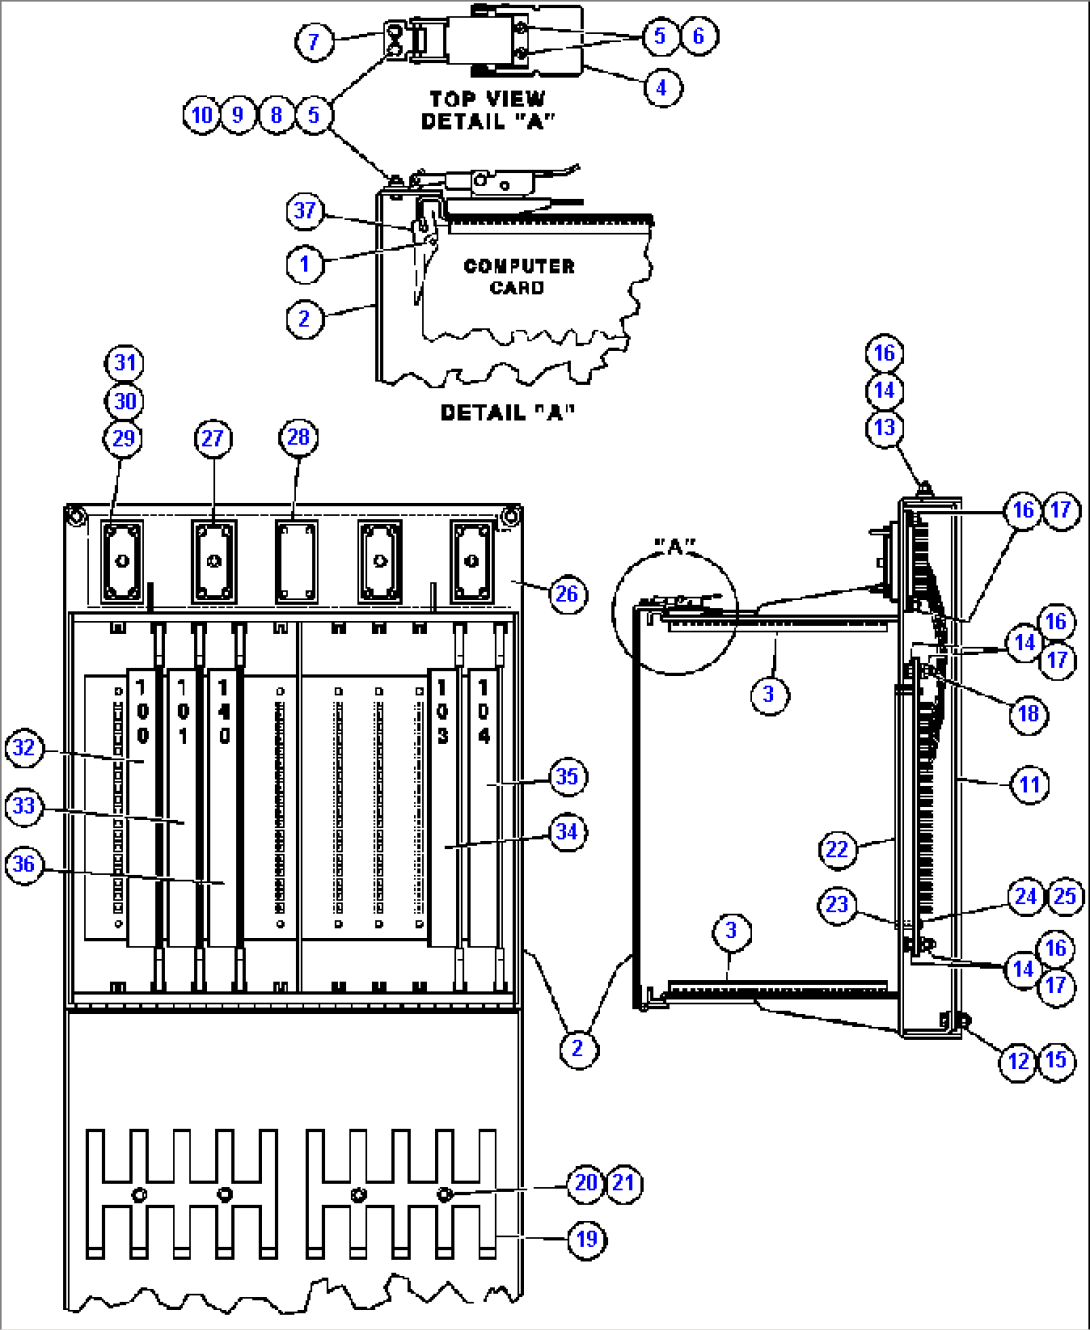 STATEX III CONTROL CABINET (PB8946)